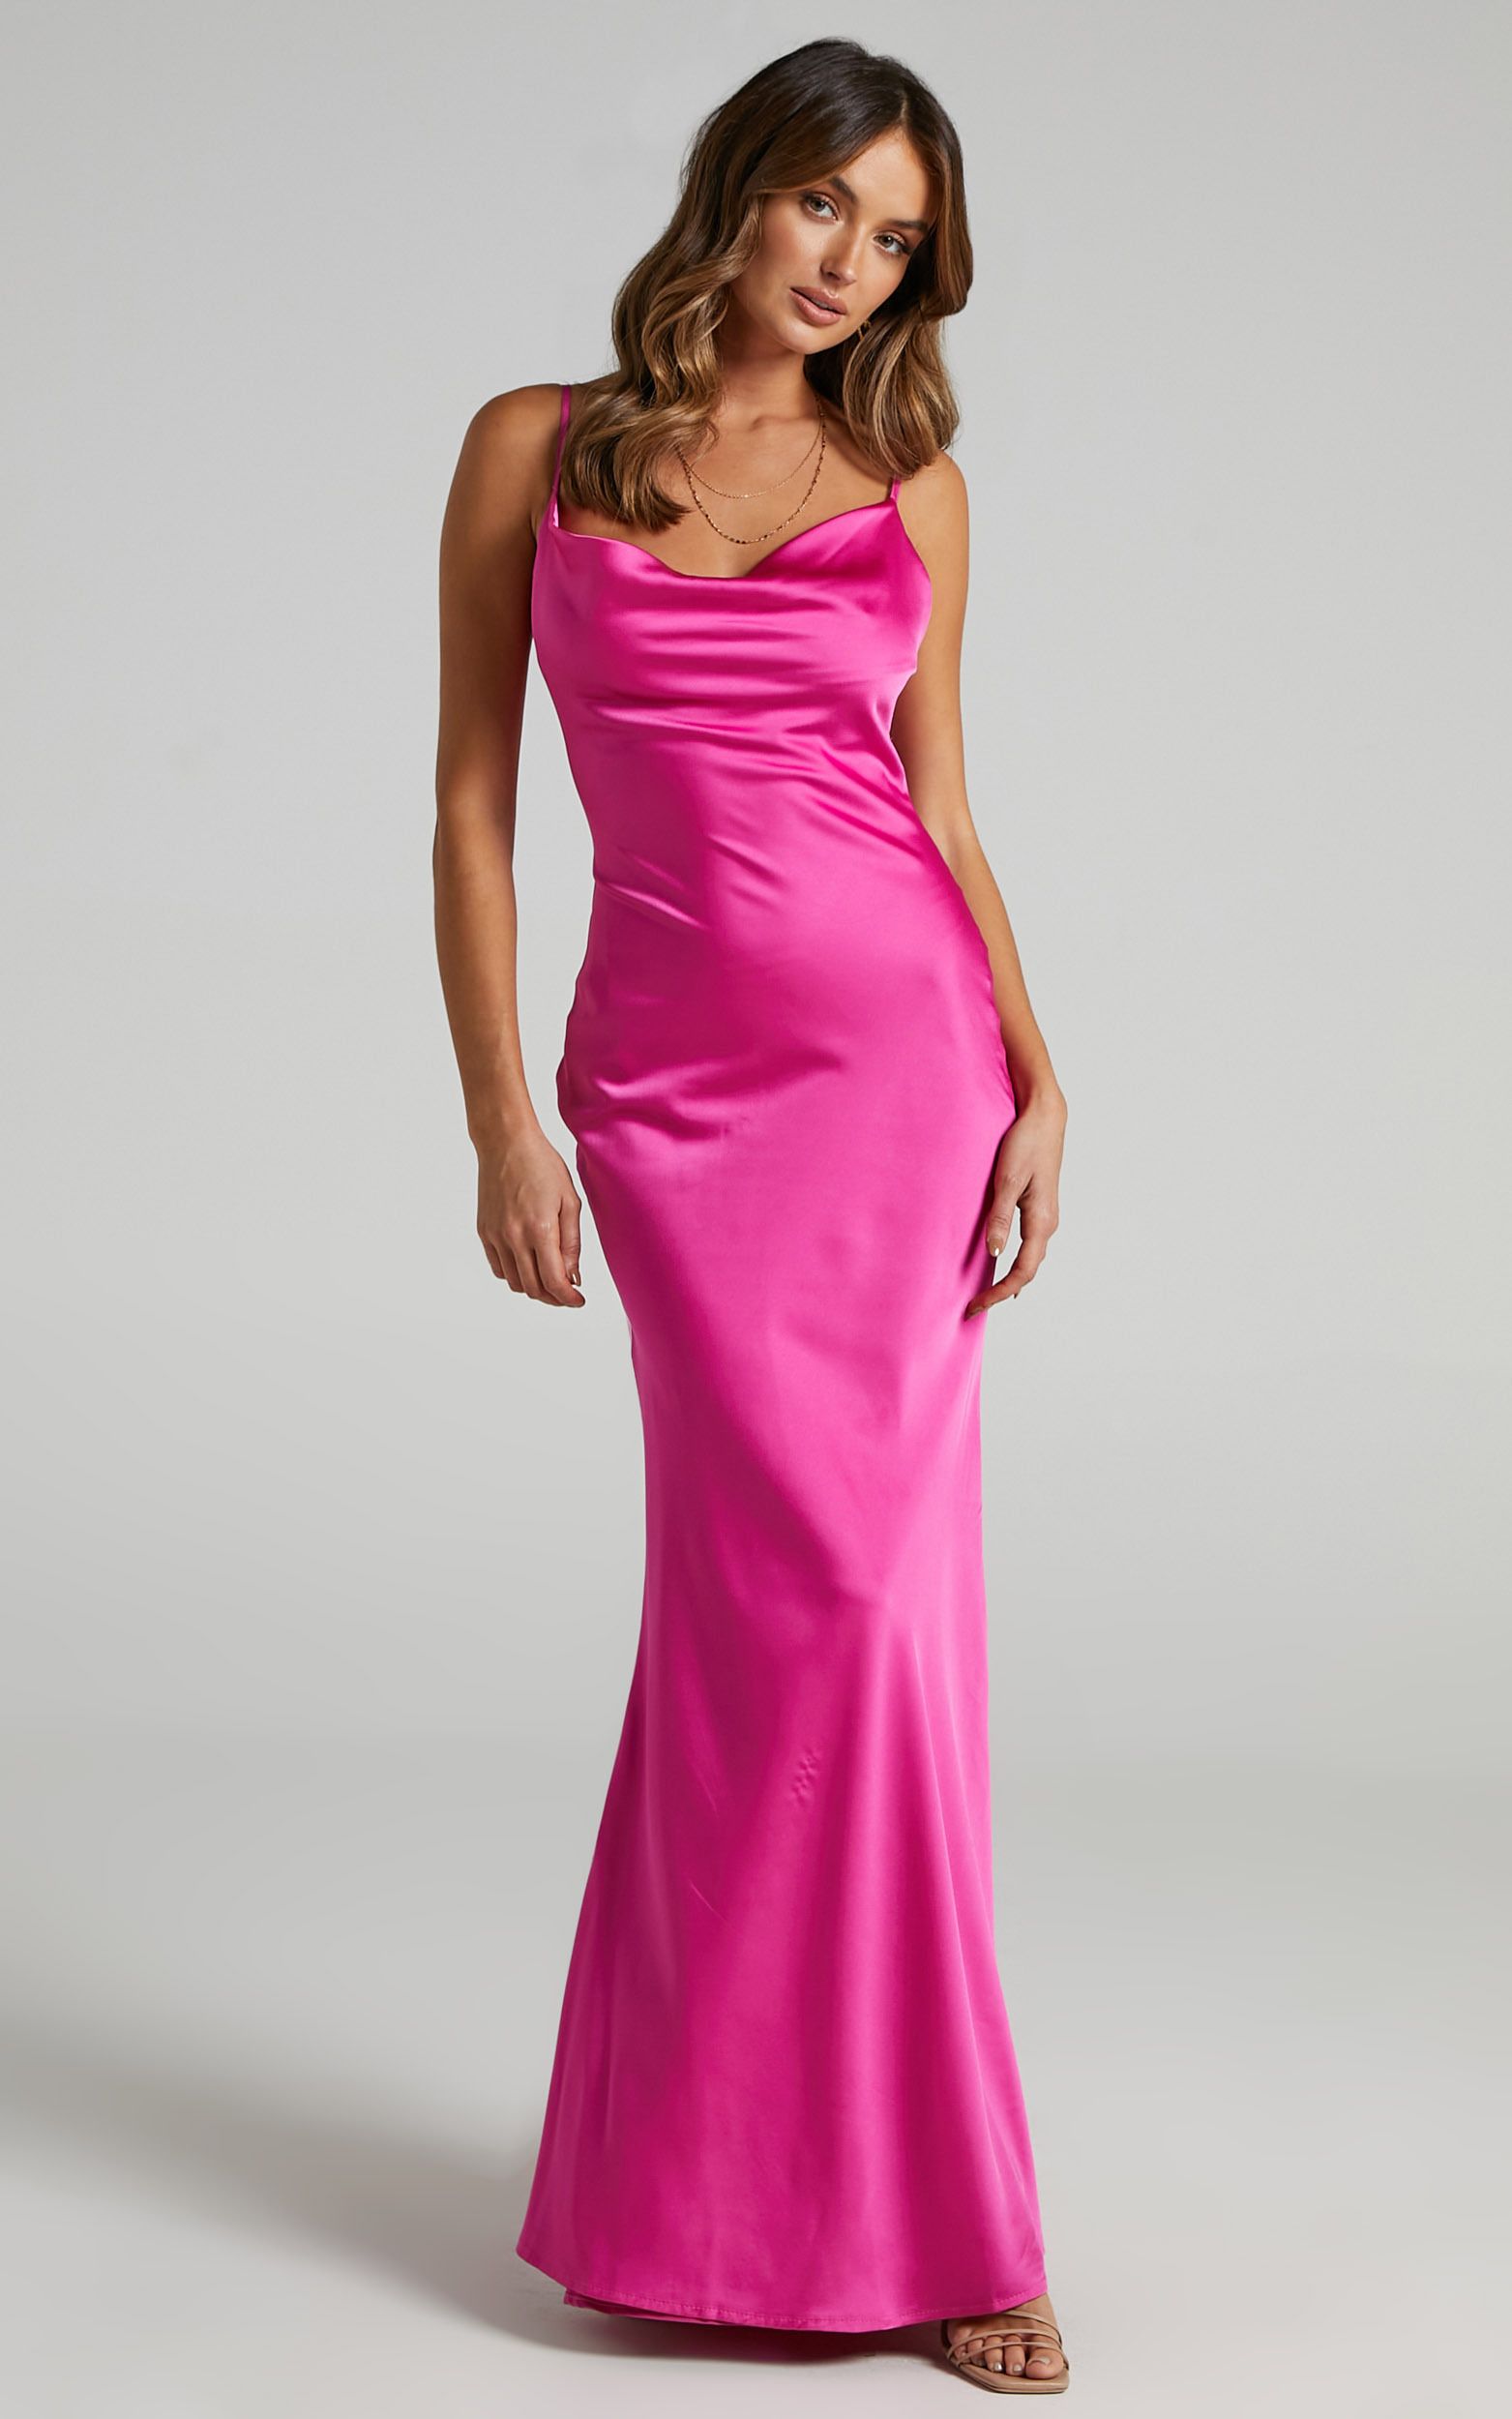 Lunaria Dress in Hot Pink Satin | Showpo - deactived